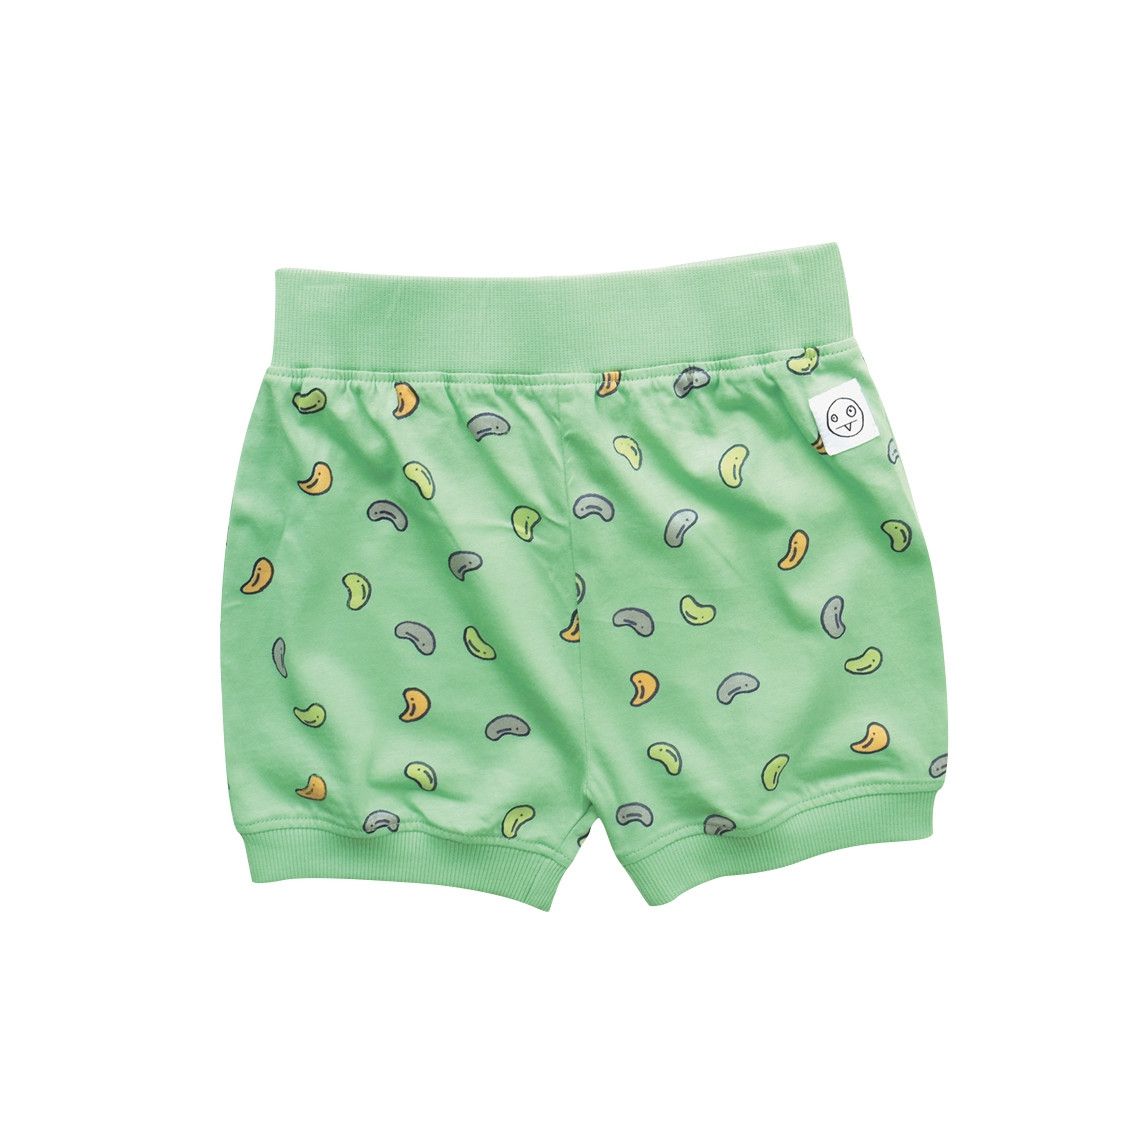 Boys&Girls Aqua Green Jelly Bean Printed Cotton Short - CÉMAROSE | Children's Fashion Store